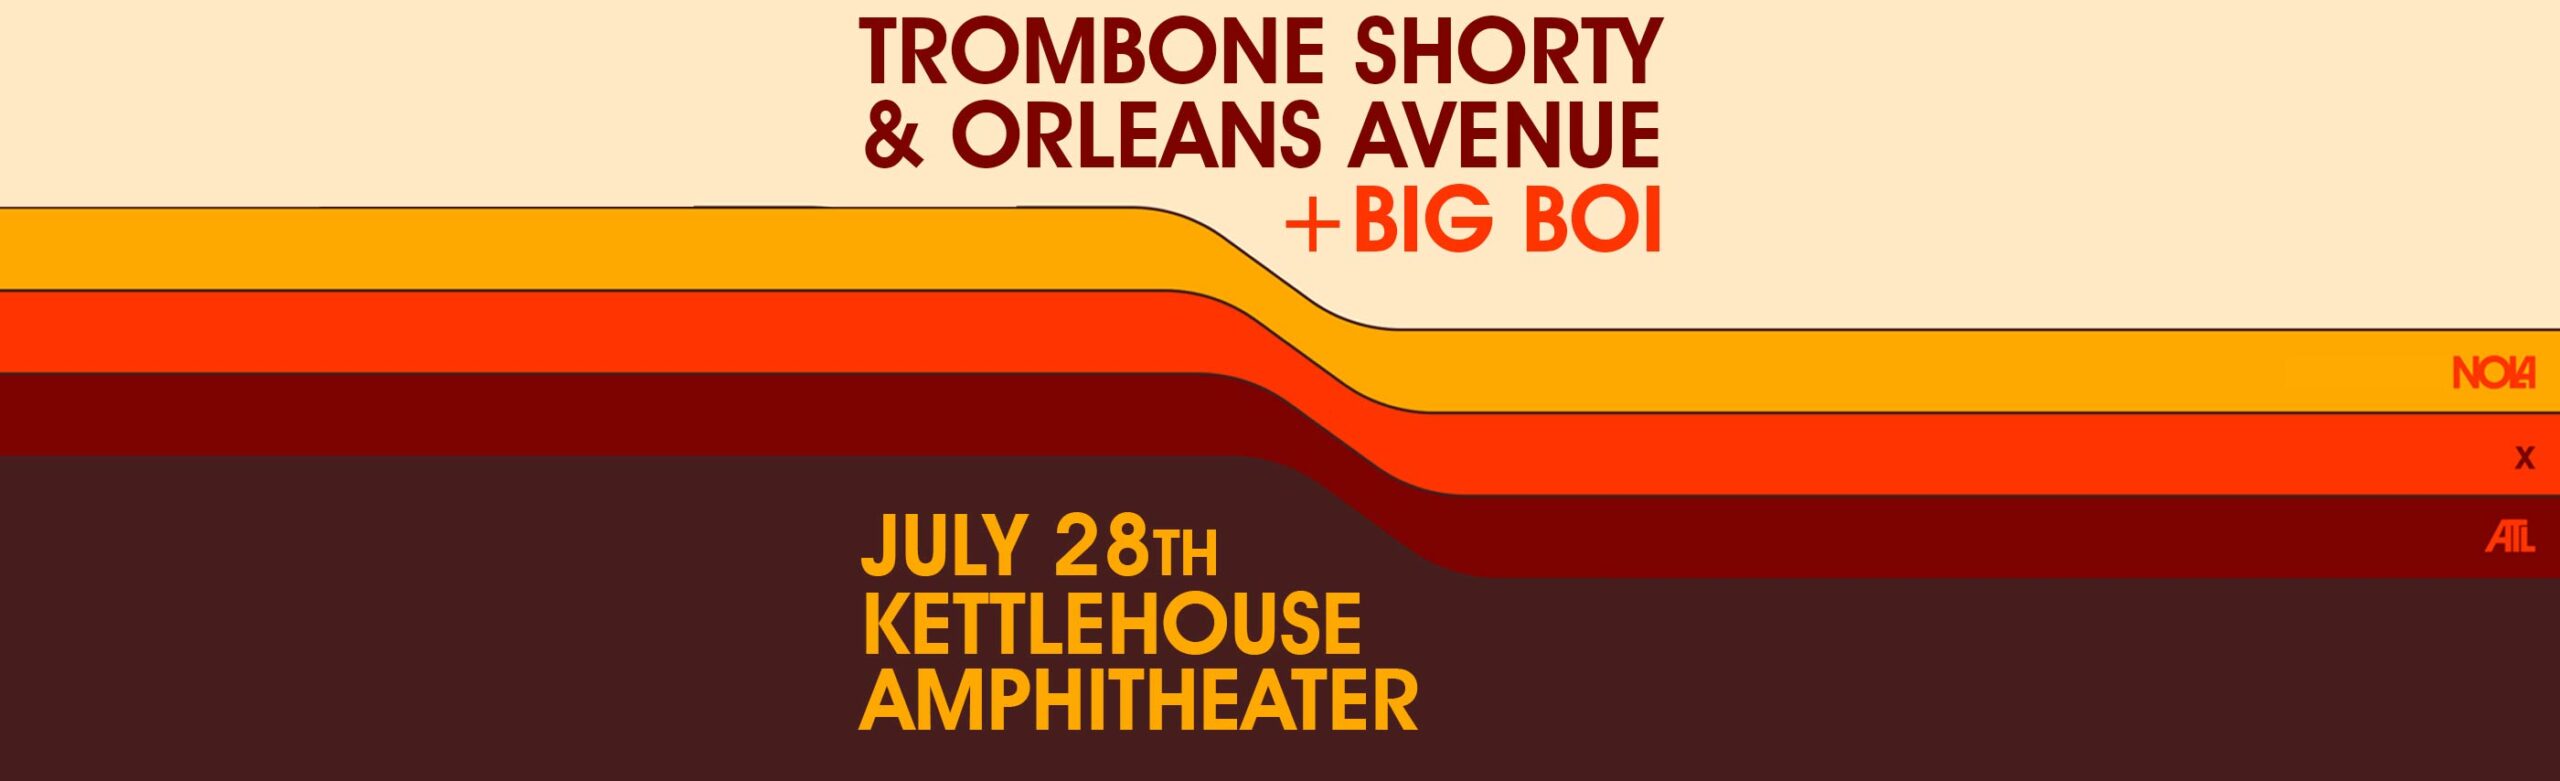 NOLA x ATL: Trombone Shorty & Orleans Avenue Return to KettleHouse Amphitheater with Big Boi Image